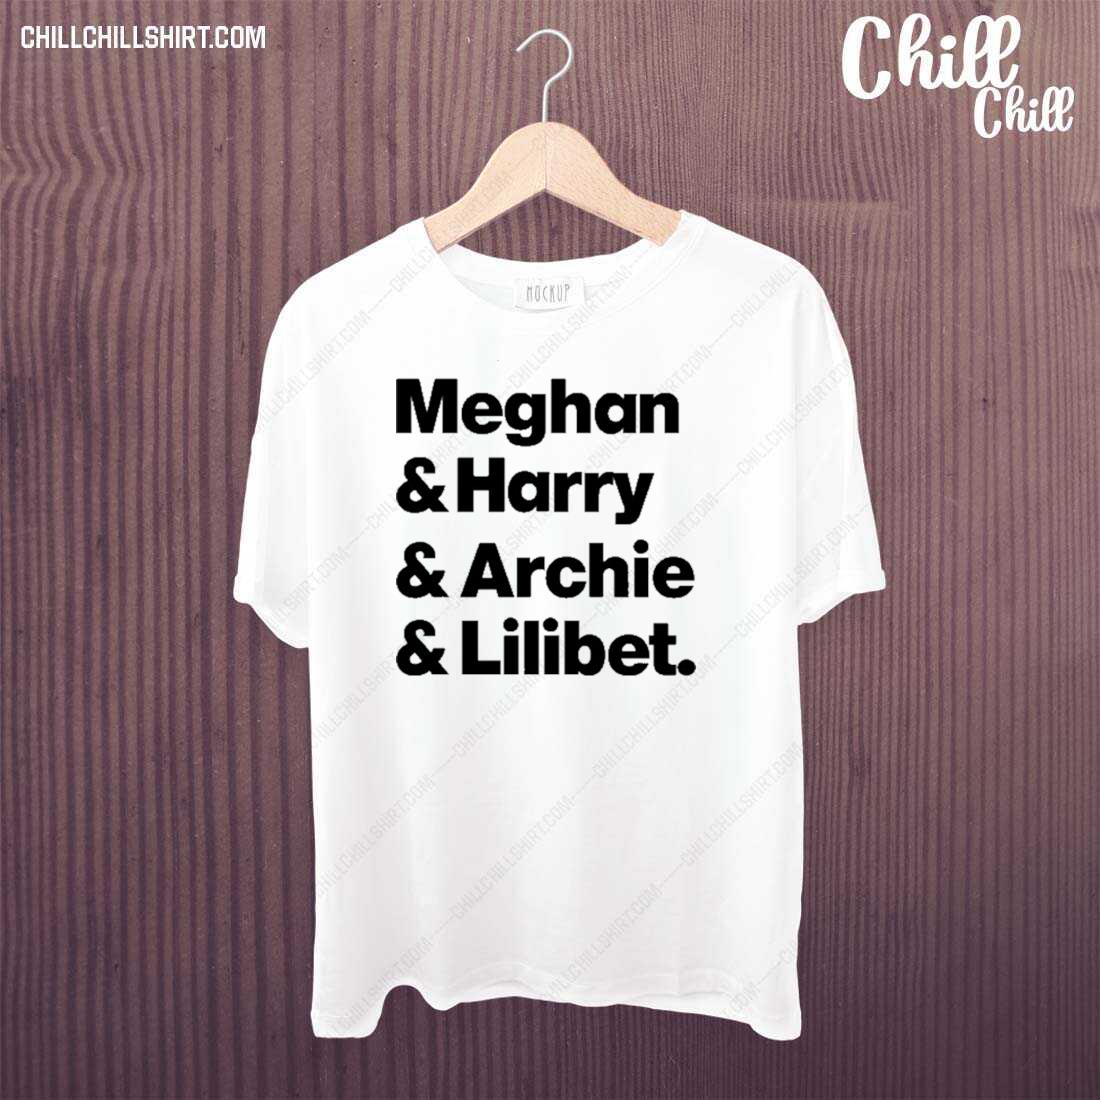 Official meghan & Harry & Archie & Lilibet T-shirt